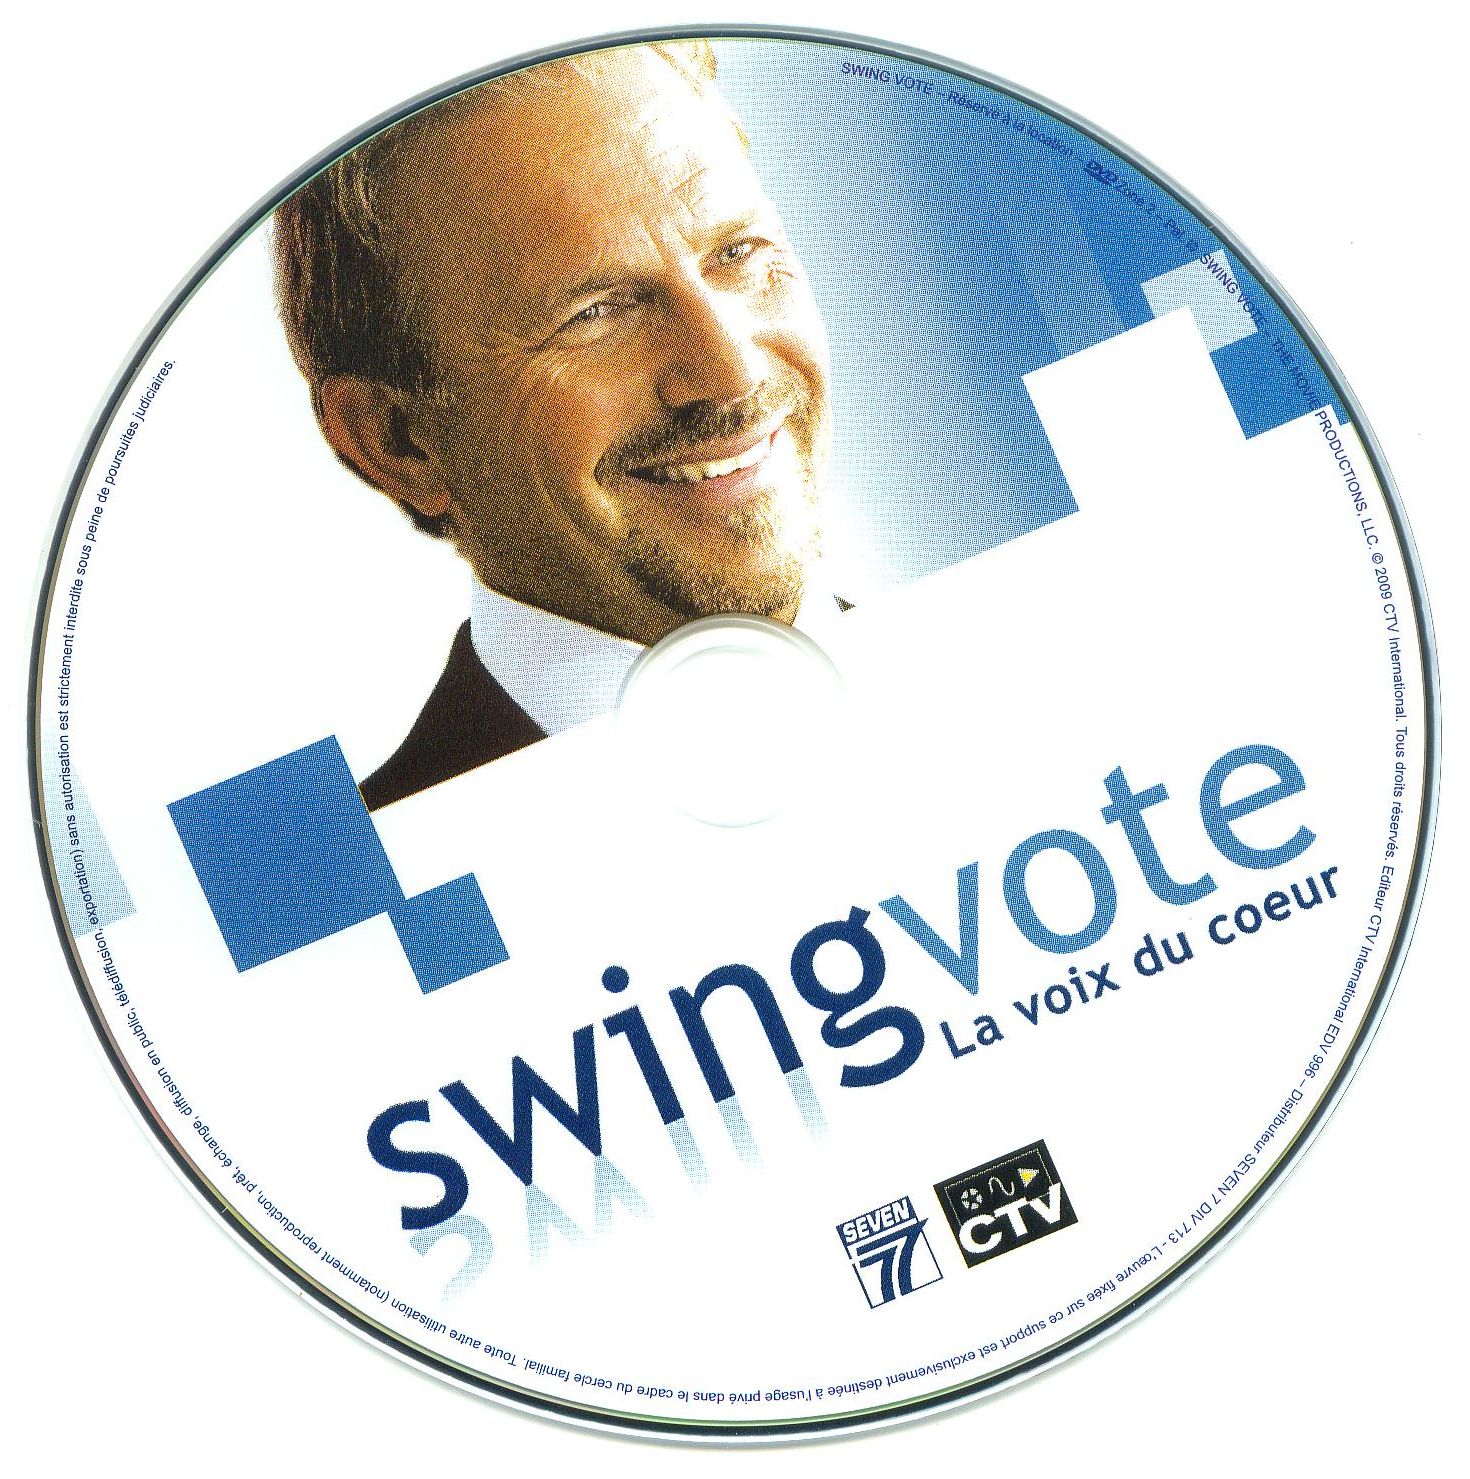 Swing vote